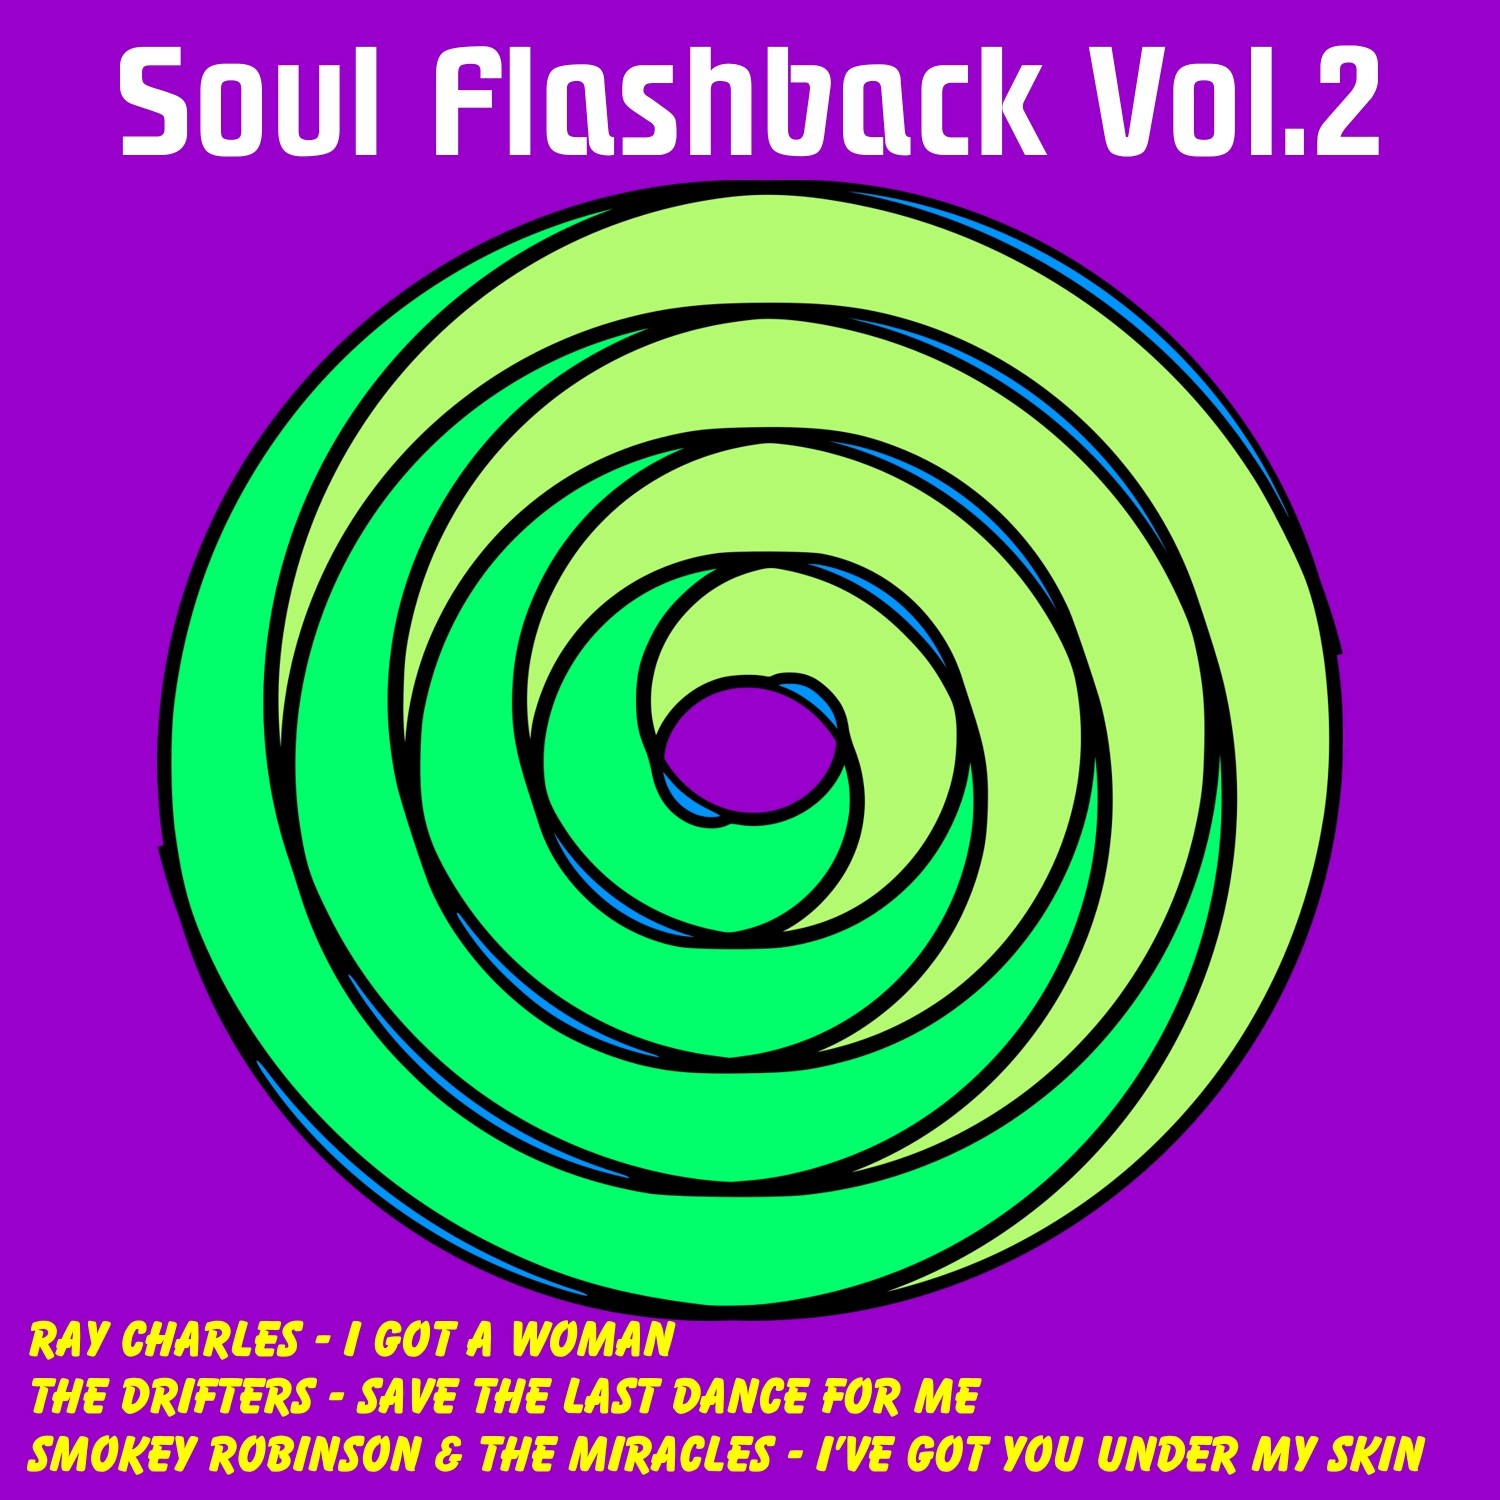 Soul Flashback, Vol. 2